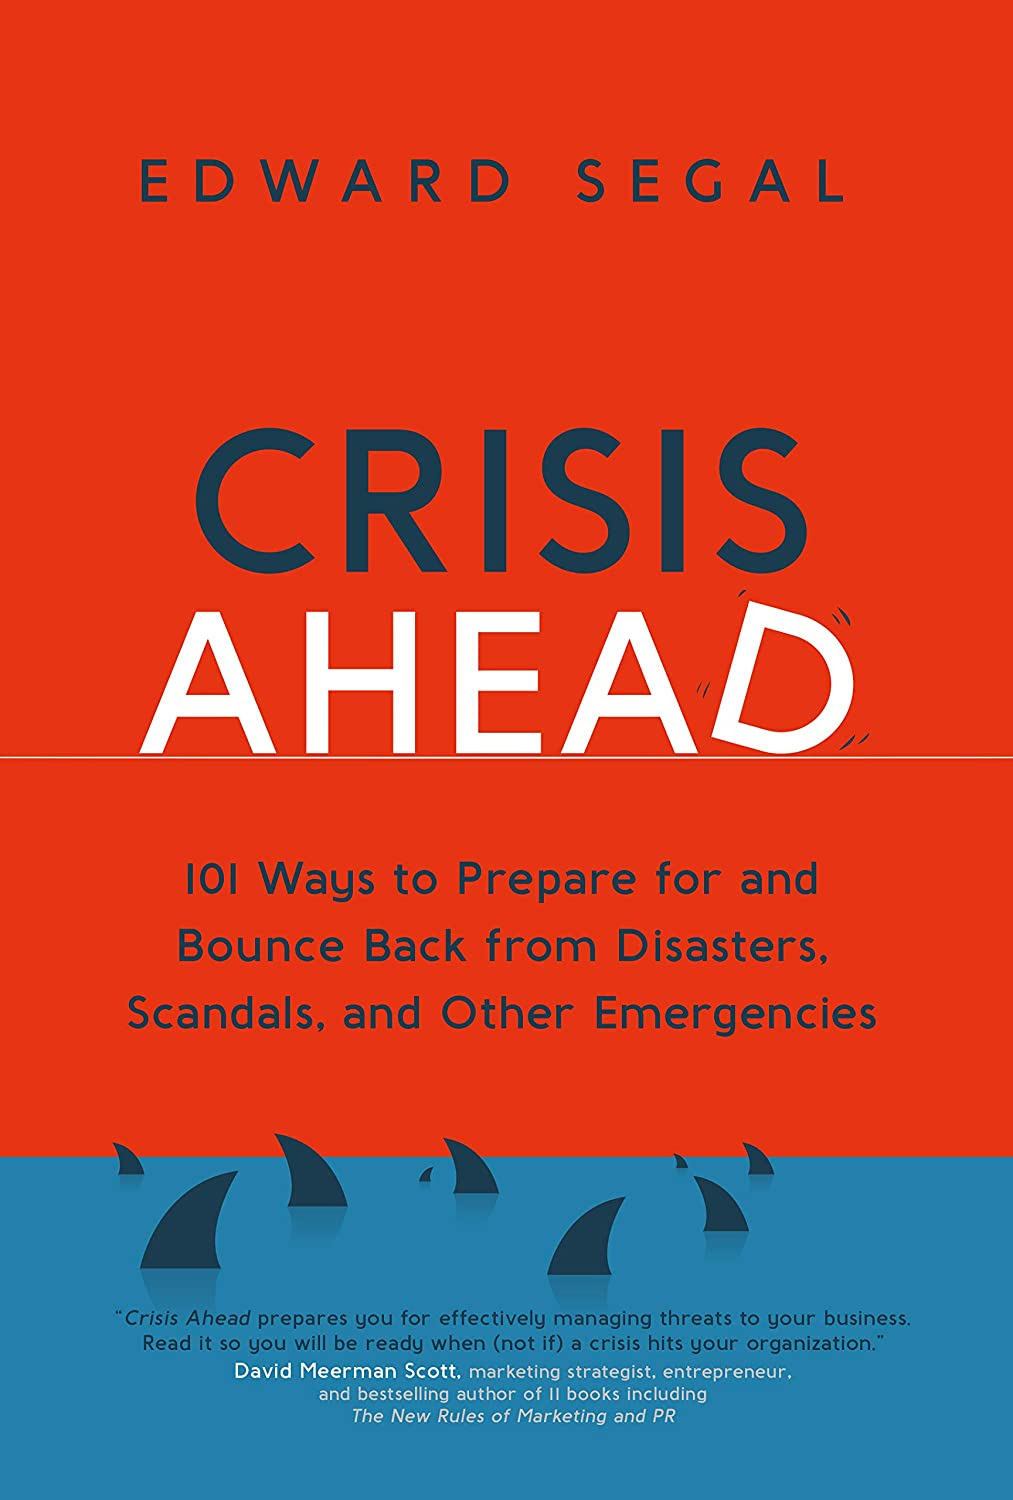 Edward Segal, Crisis Management Expert